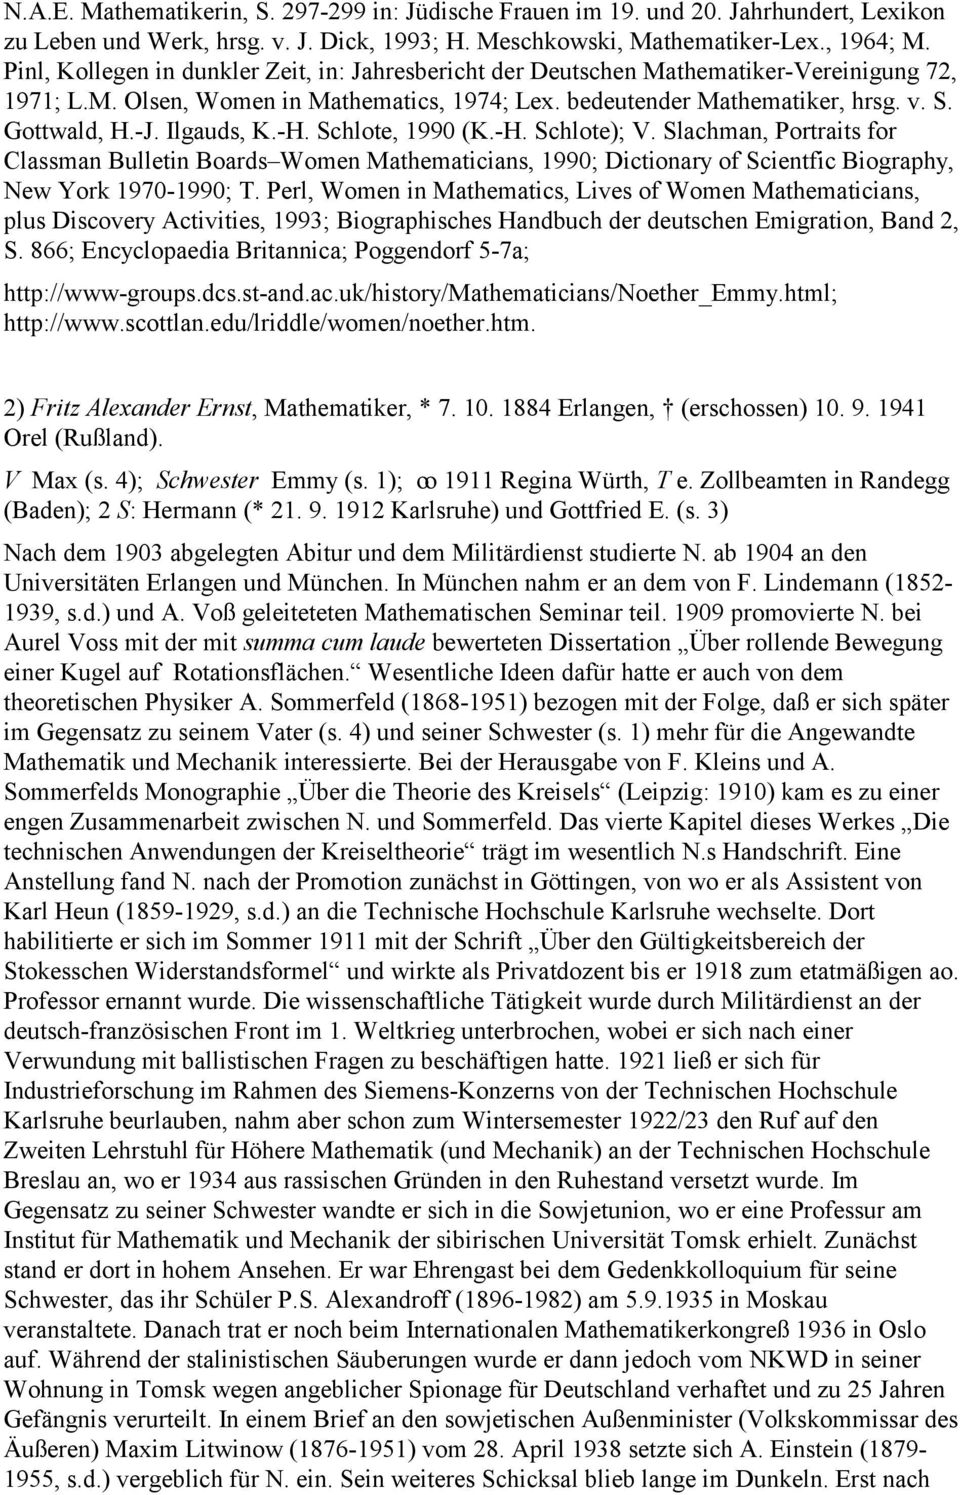 Ilgauds, K.-H. Schlote, 1990 (K.-H. Schlote); V. Slachman, Portraits for Classman Bulletin Boards Women Mathematicians, 1990; Dictionary of Scientfic Biography, New York 1970-1990; T.